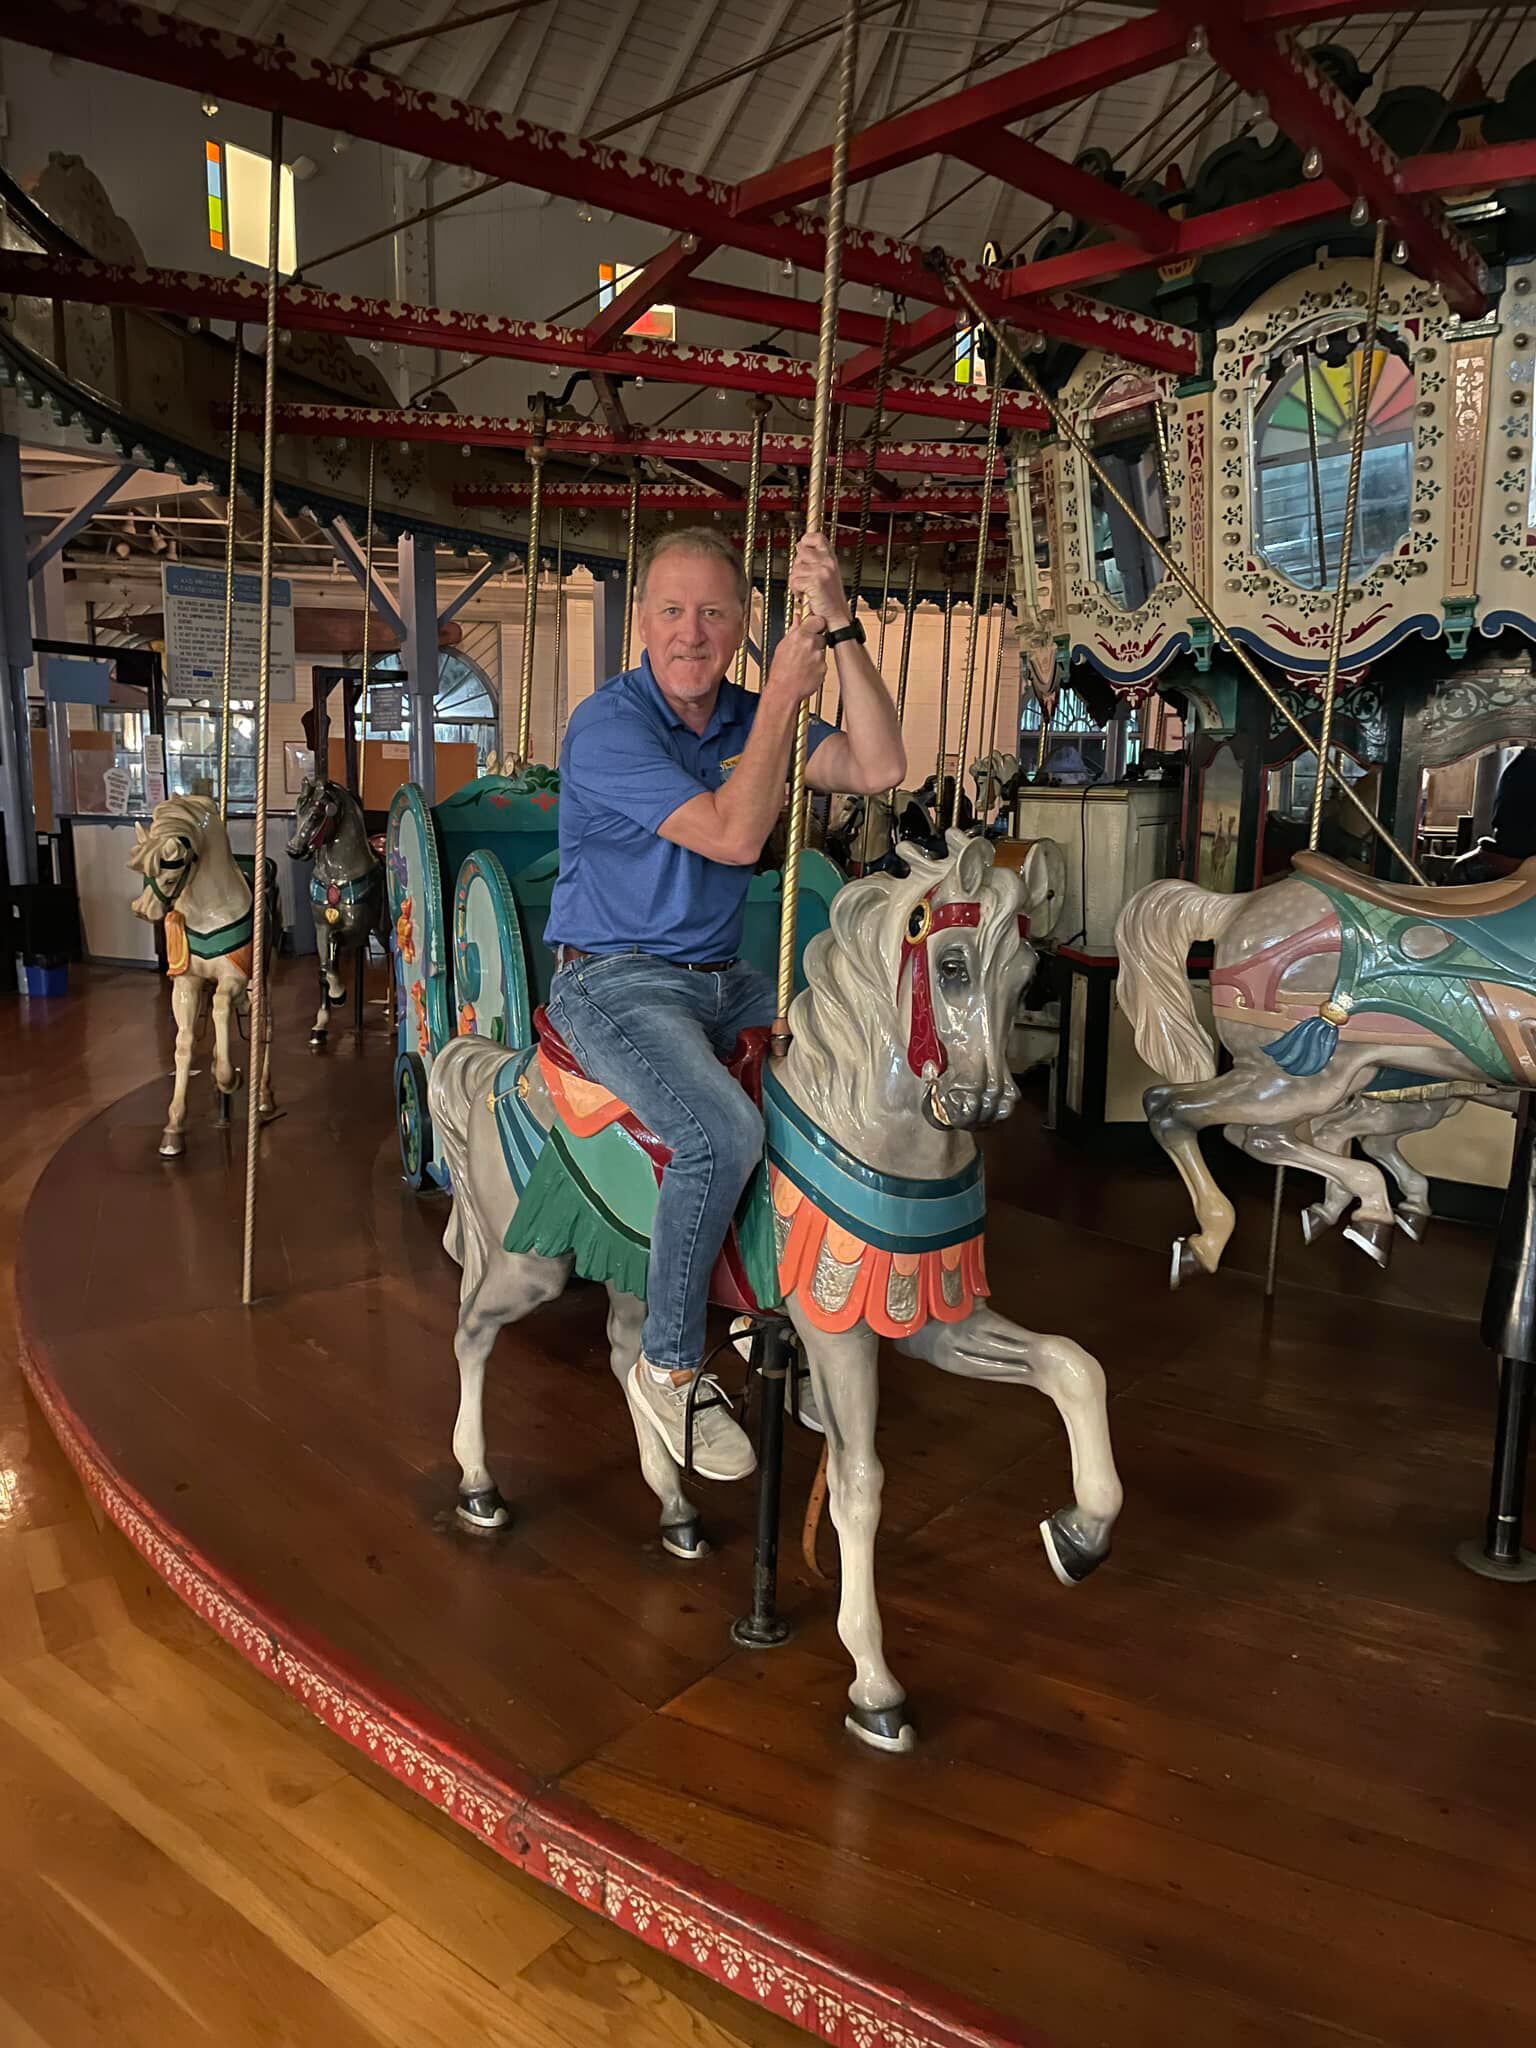 Slocum hops aboard the carousel. 